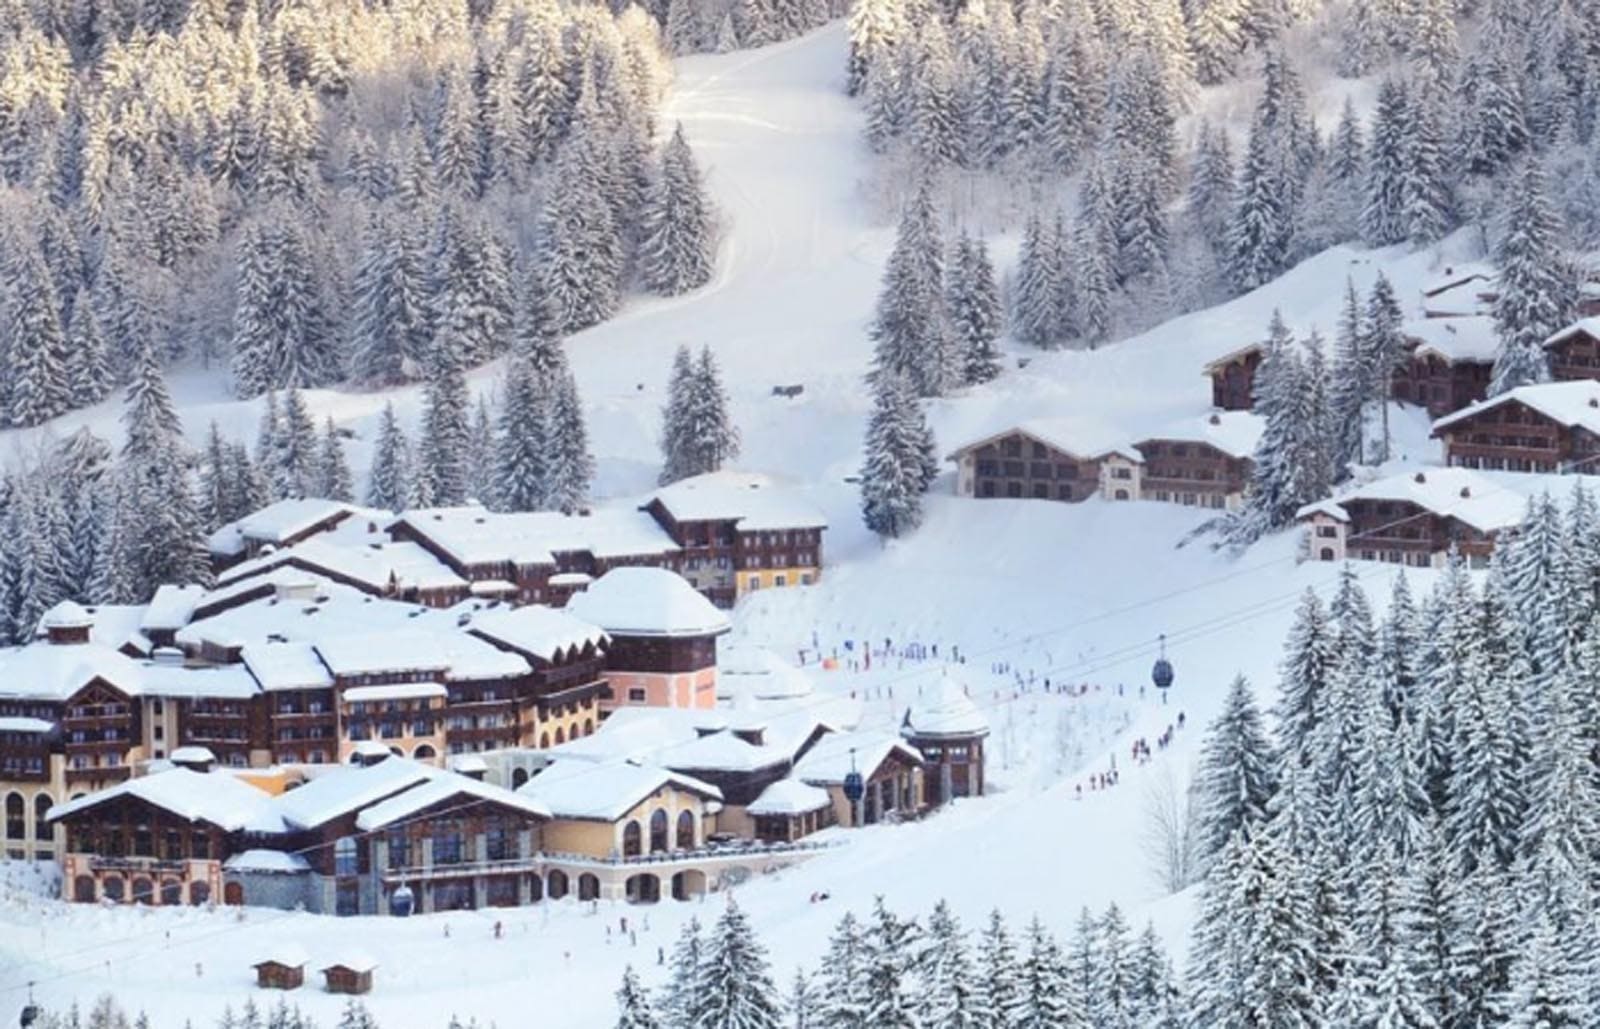 The traditional mountain ski resort of Valmorel